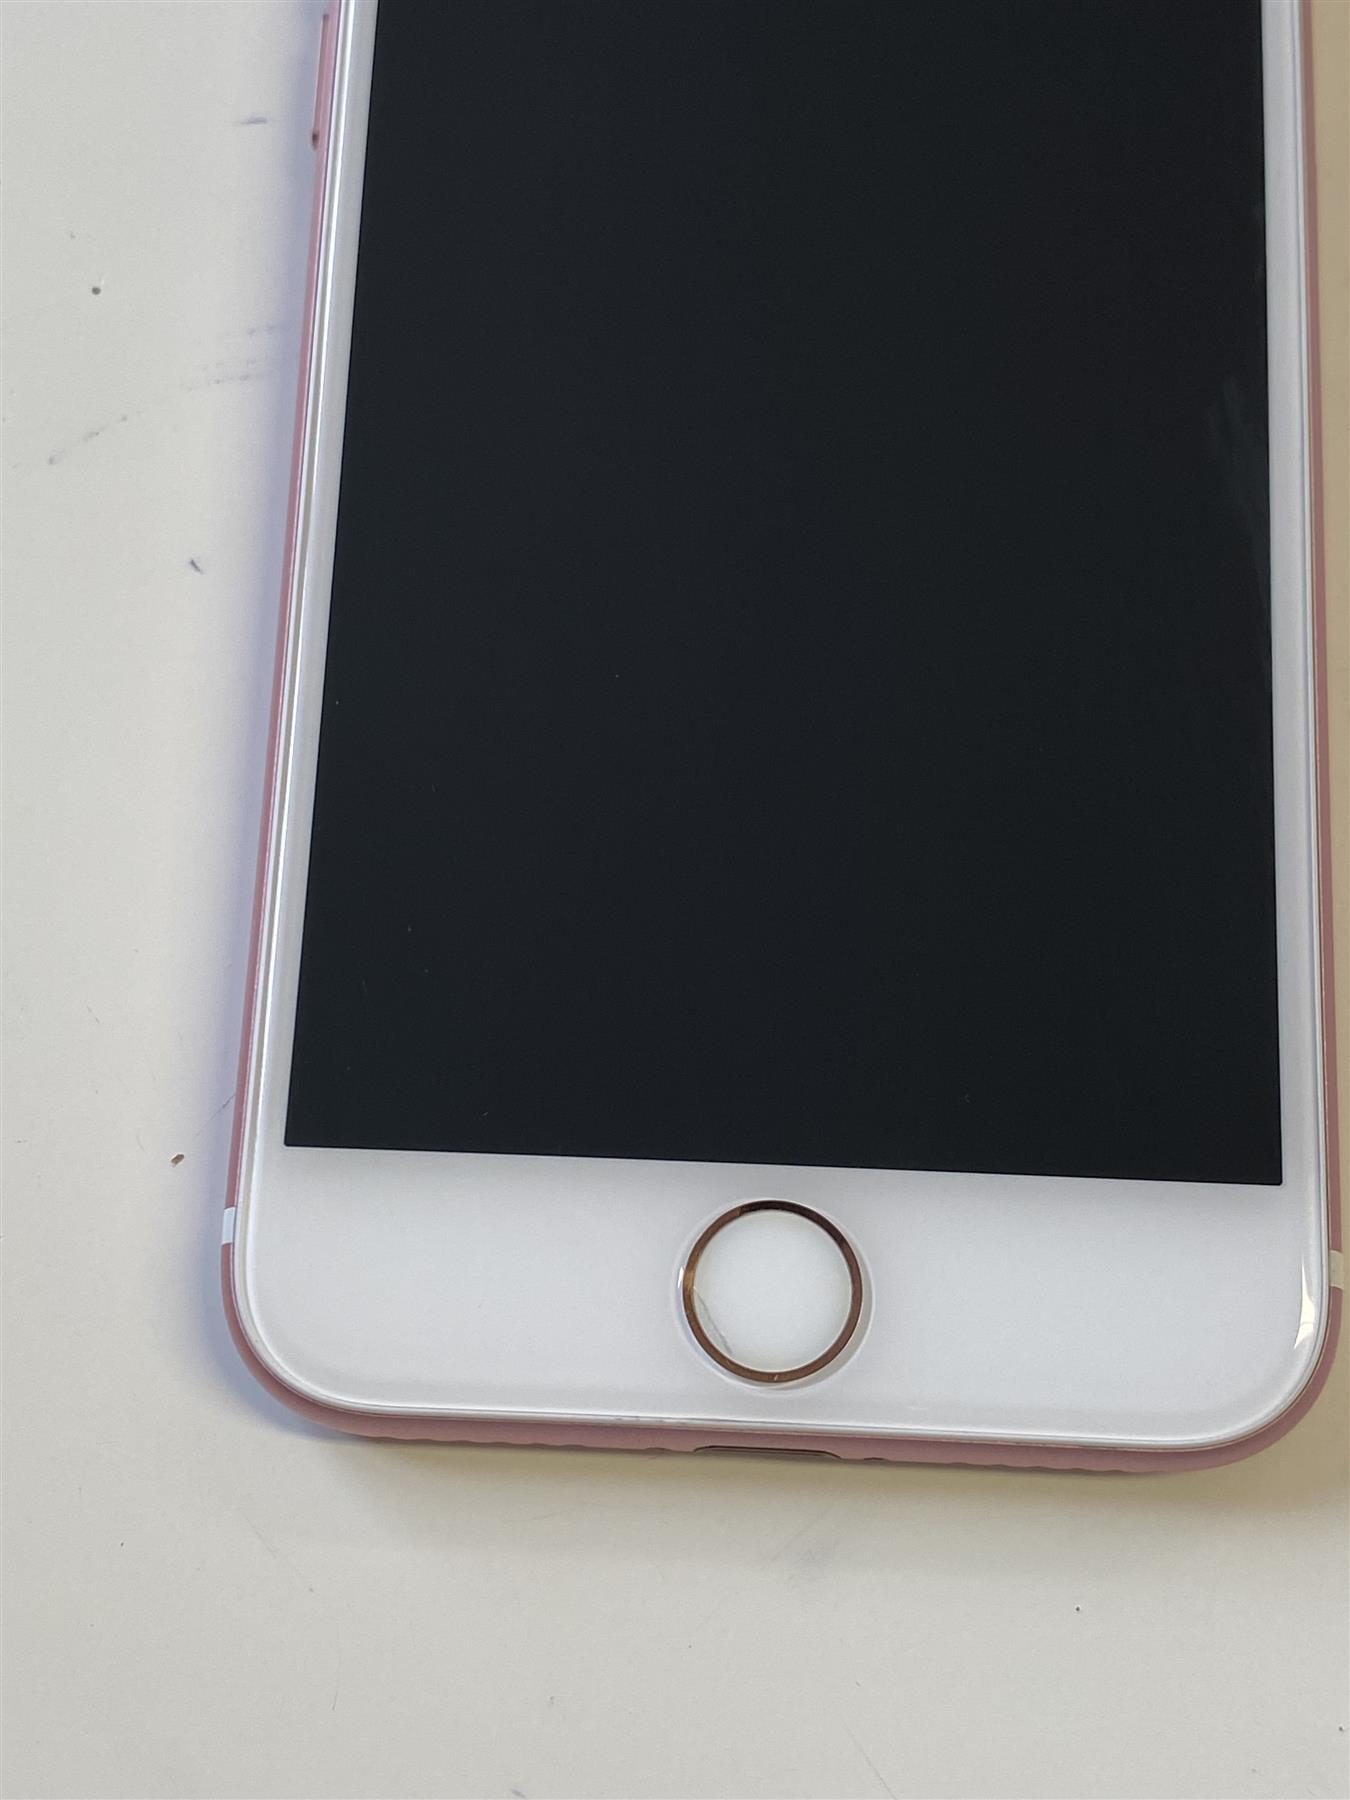 Apple iPhone 7 32GB Rose Gold Unlocked Used